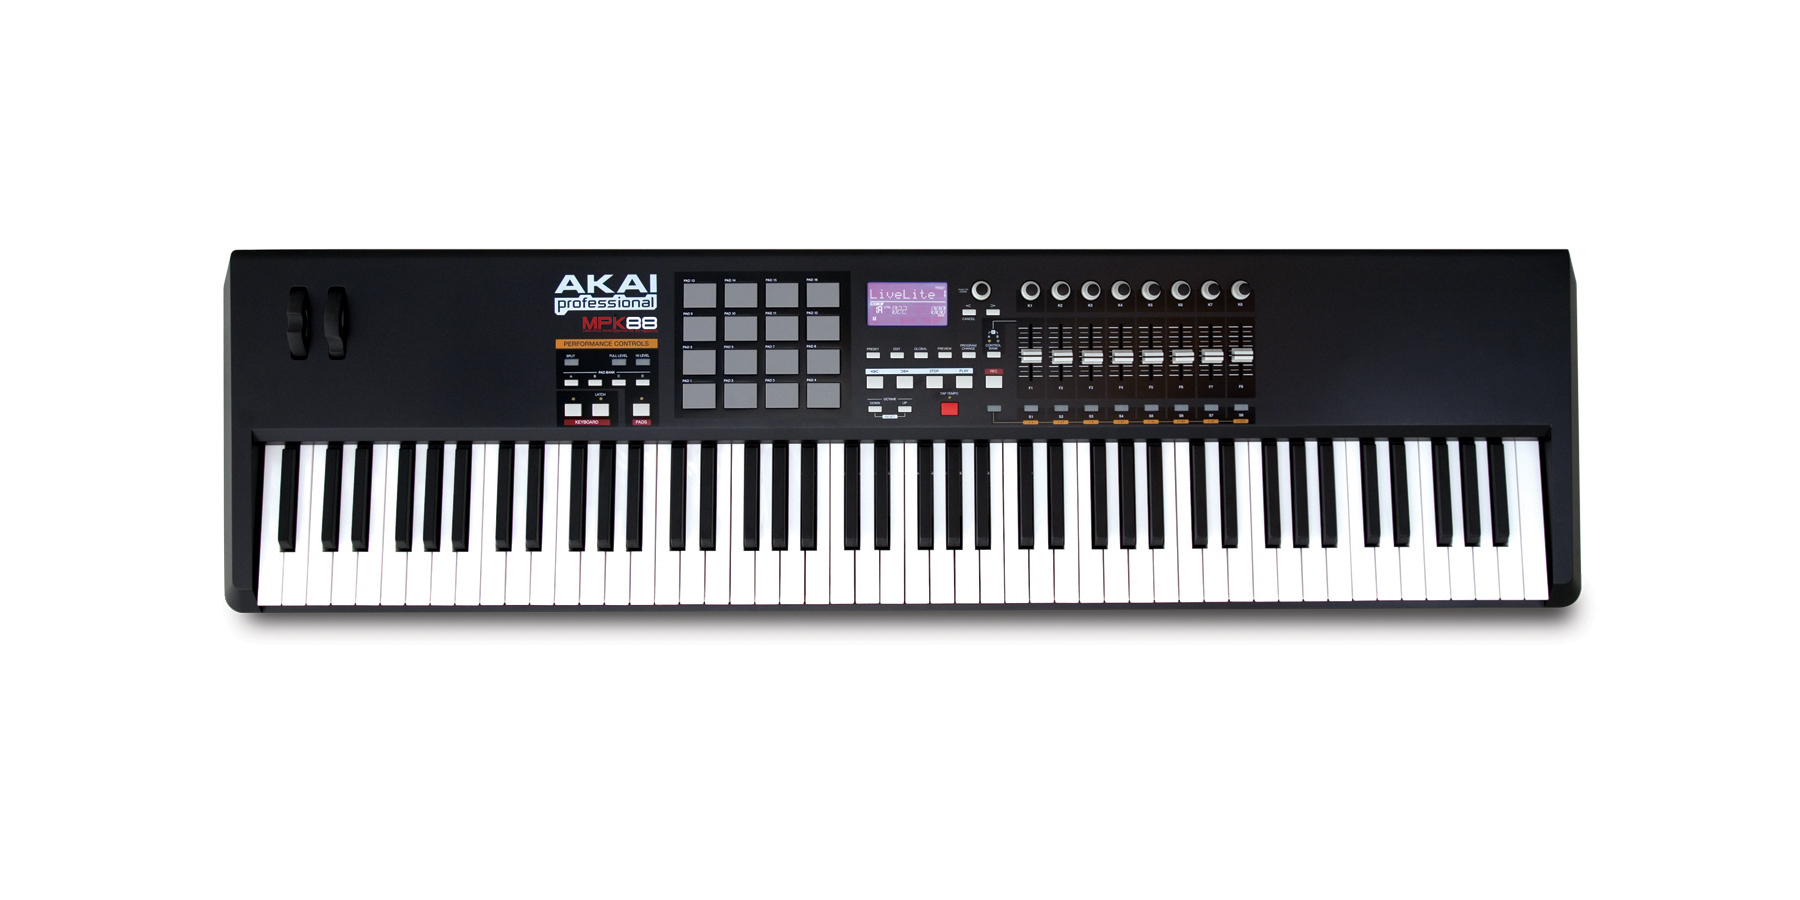 Akai Akai MPK88 MIDI Controller Keyboard, 88-Key